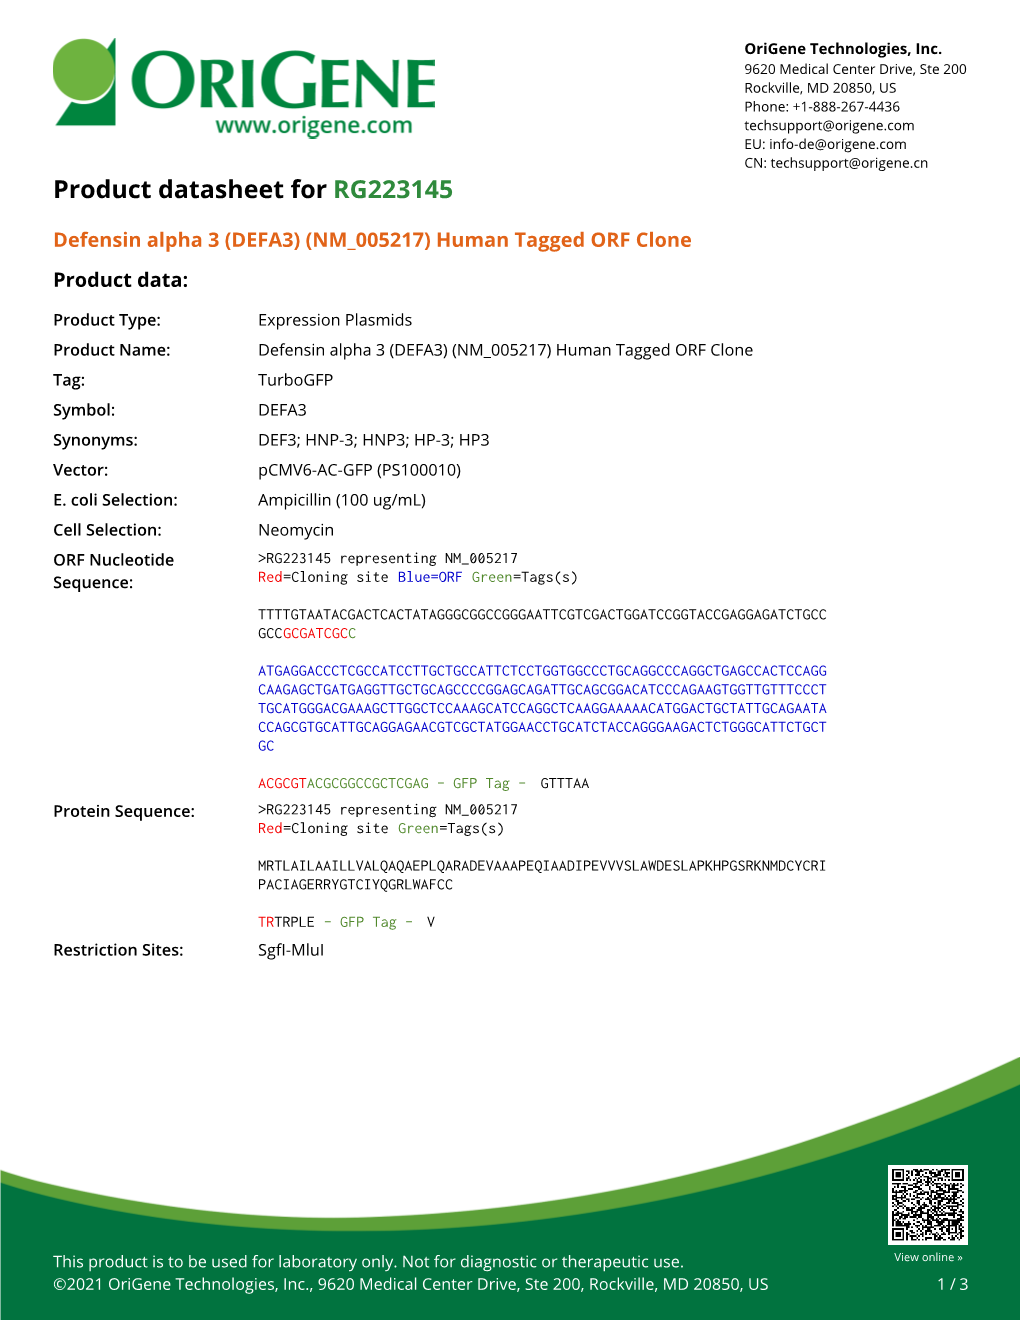 Defensin Alpha 3 (DEFA3) (NM 005217) Human Tagged ORF Clone Product Data